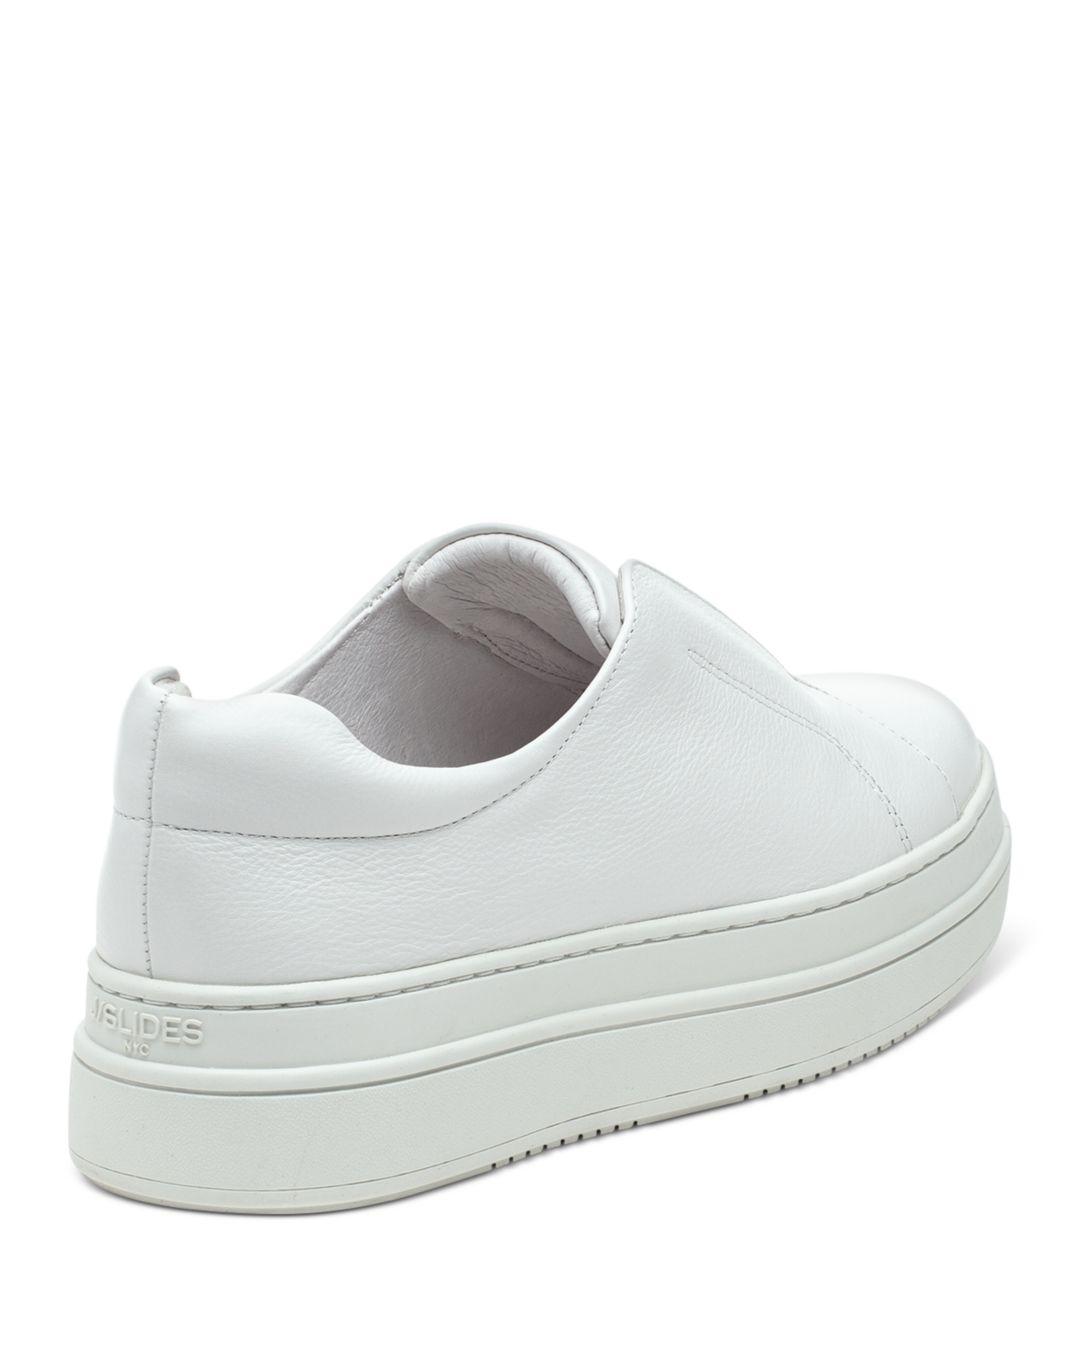 J/Slides Noel Nubuck Leather Slip On Platform Sneakers in White | Lyst